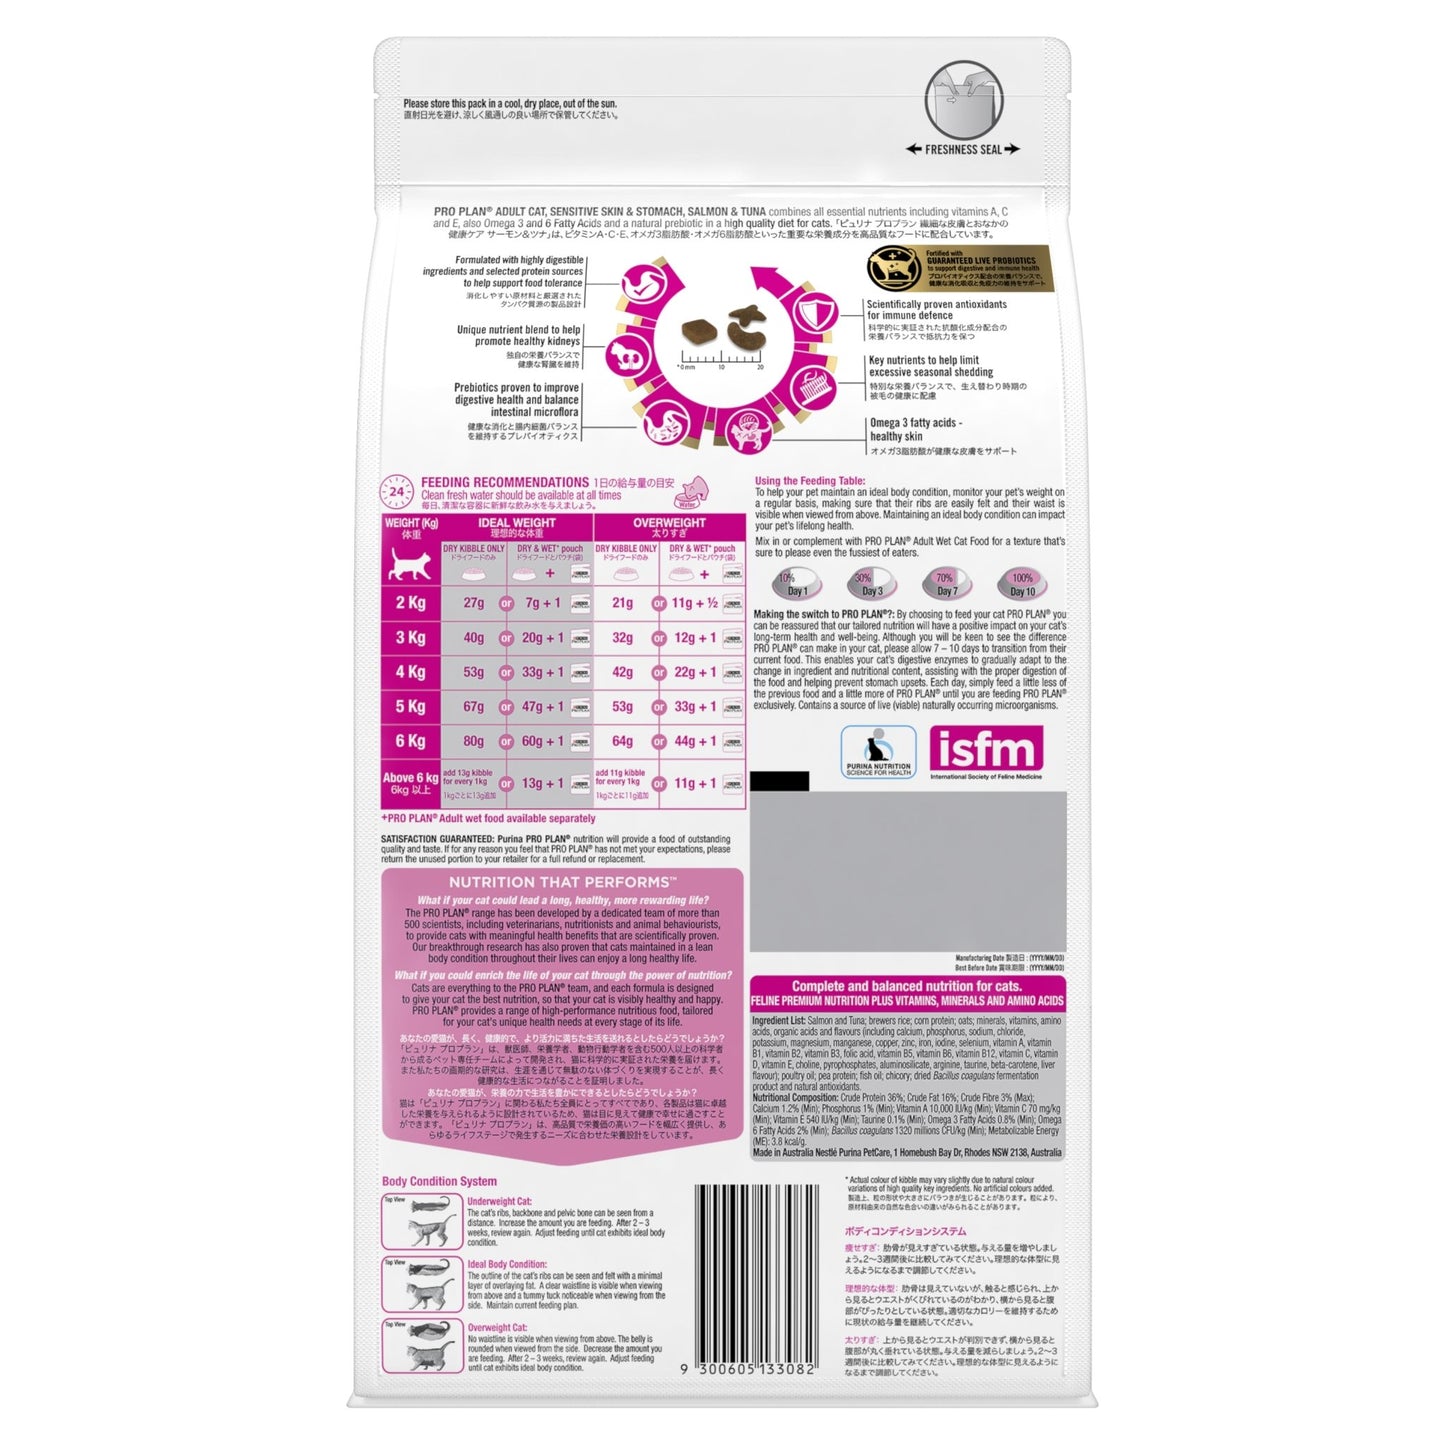 Pro Plan Cat Adult Sensitive Skin & Stomach 1.5kg - Woonona Petfood & Produce